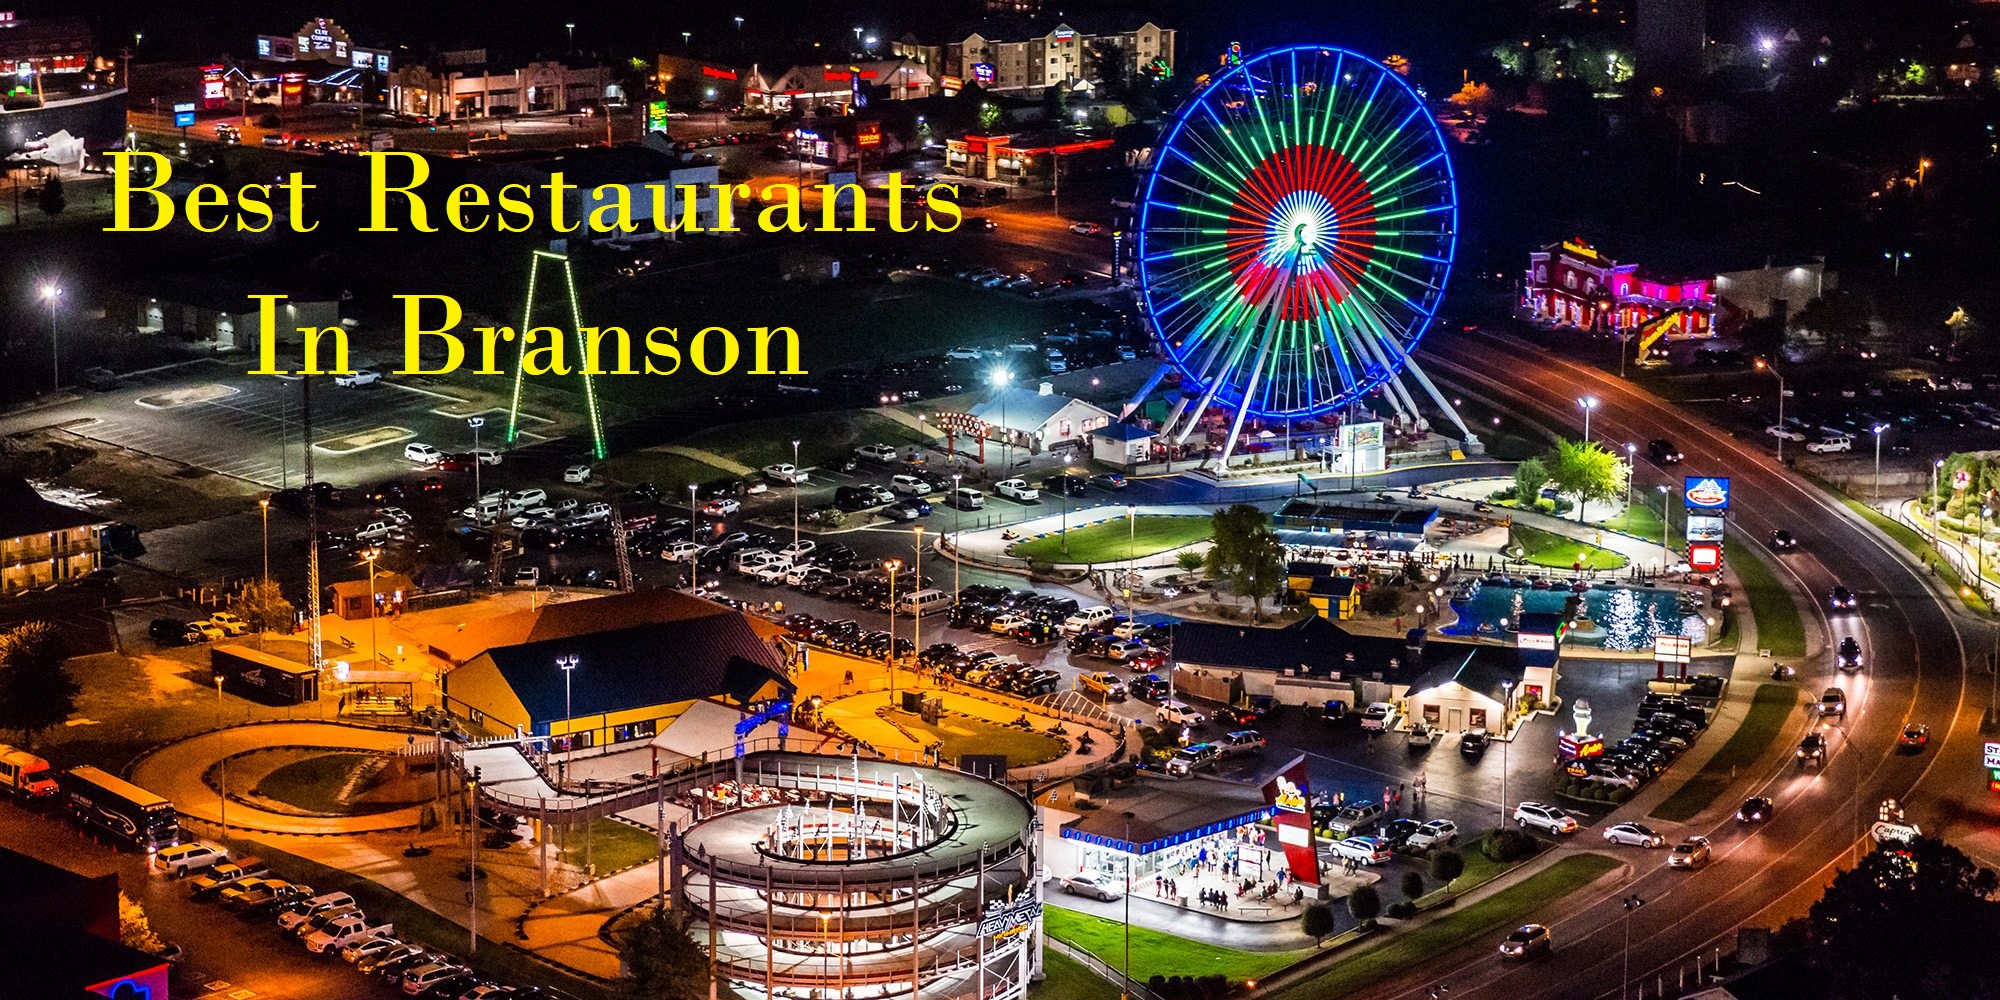 Best Restaurants In Branson Showing You The Best Restaurants In